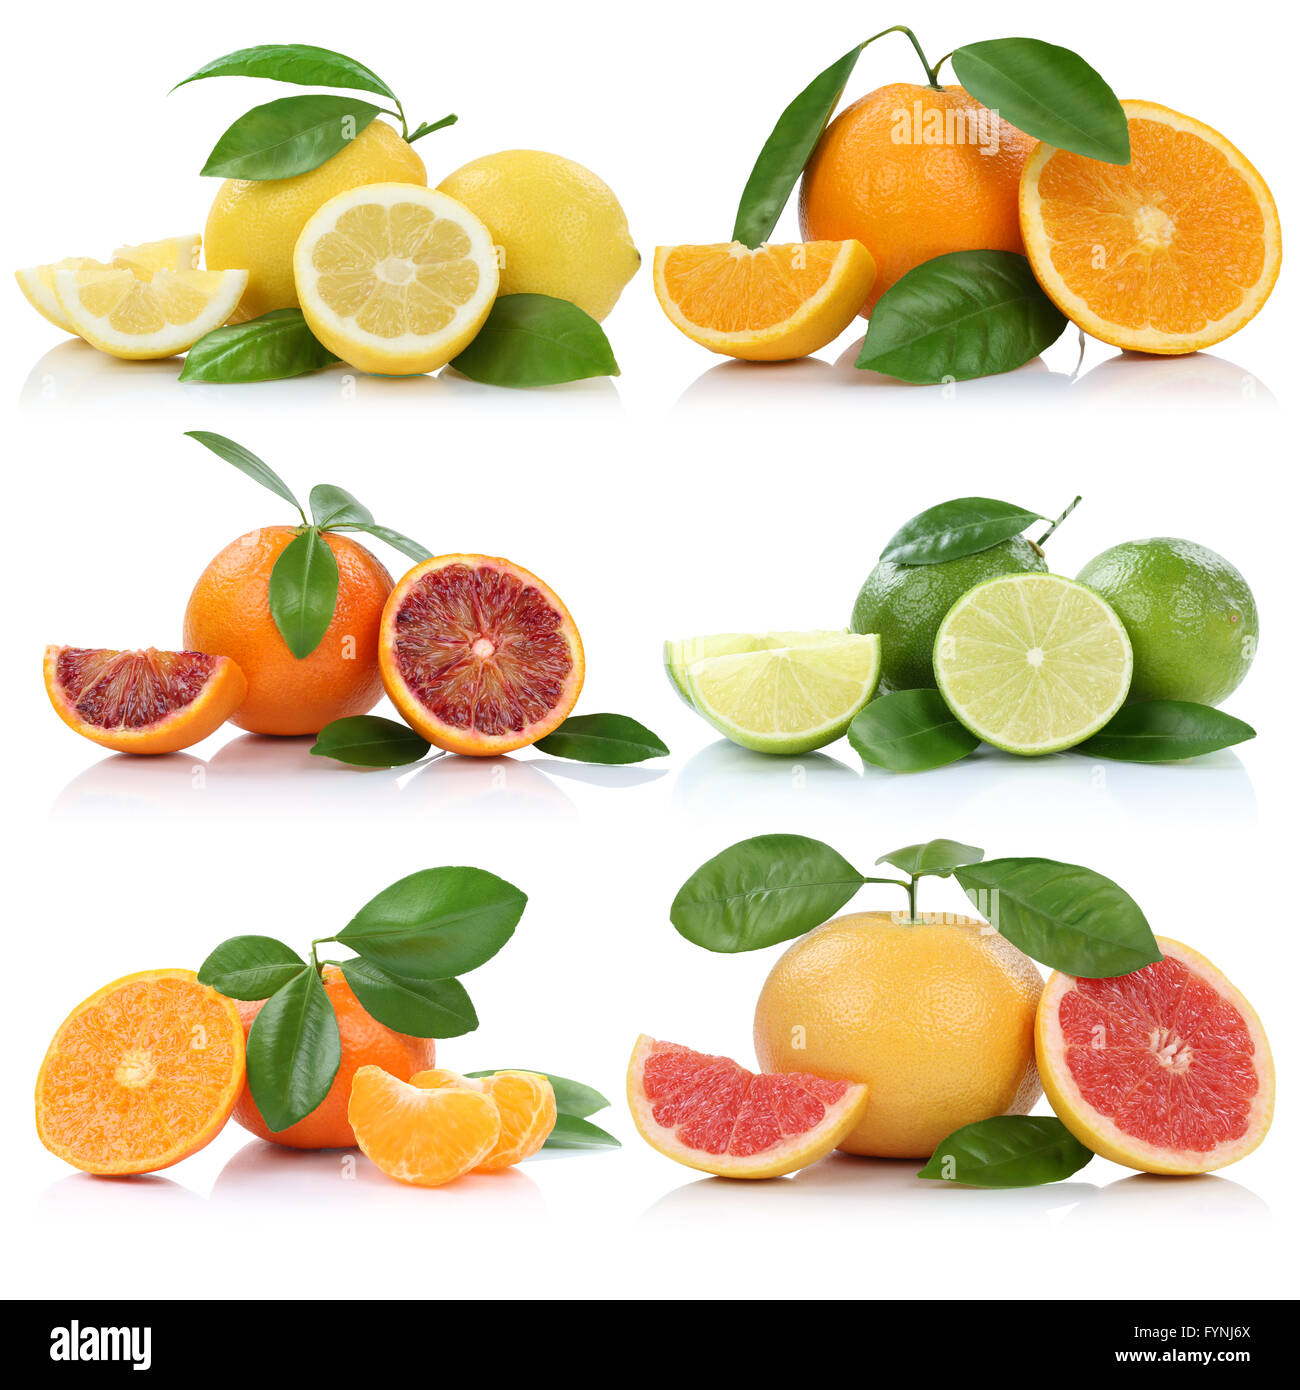 Collection of oranges mandarins lemons grapefruit fruits isolated on a white background Stock Photo